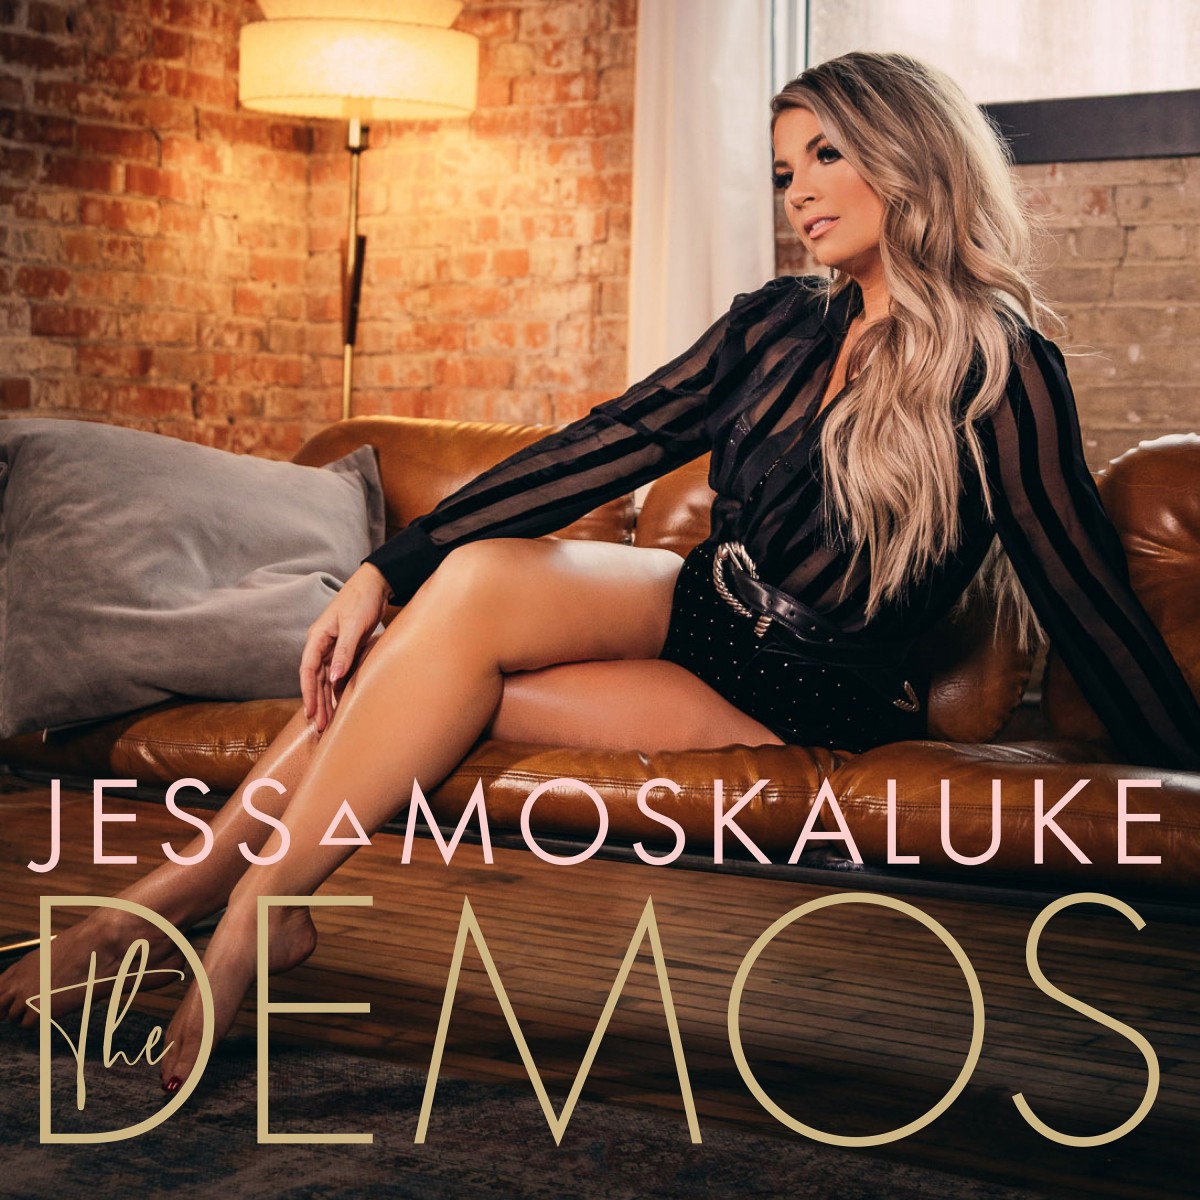 Jess Moskaluke Gets Intimate